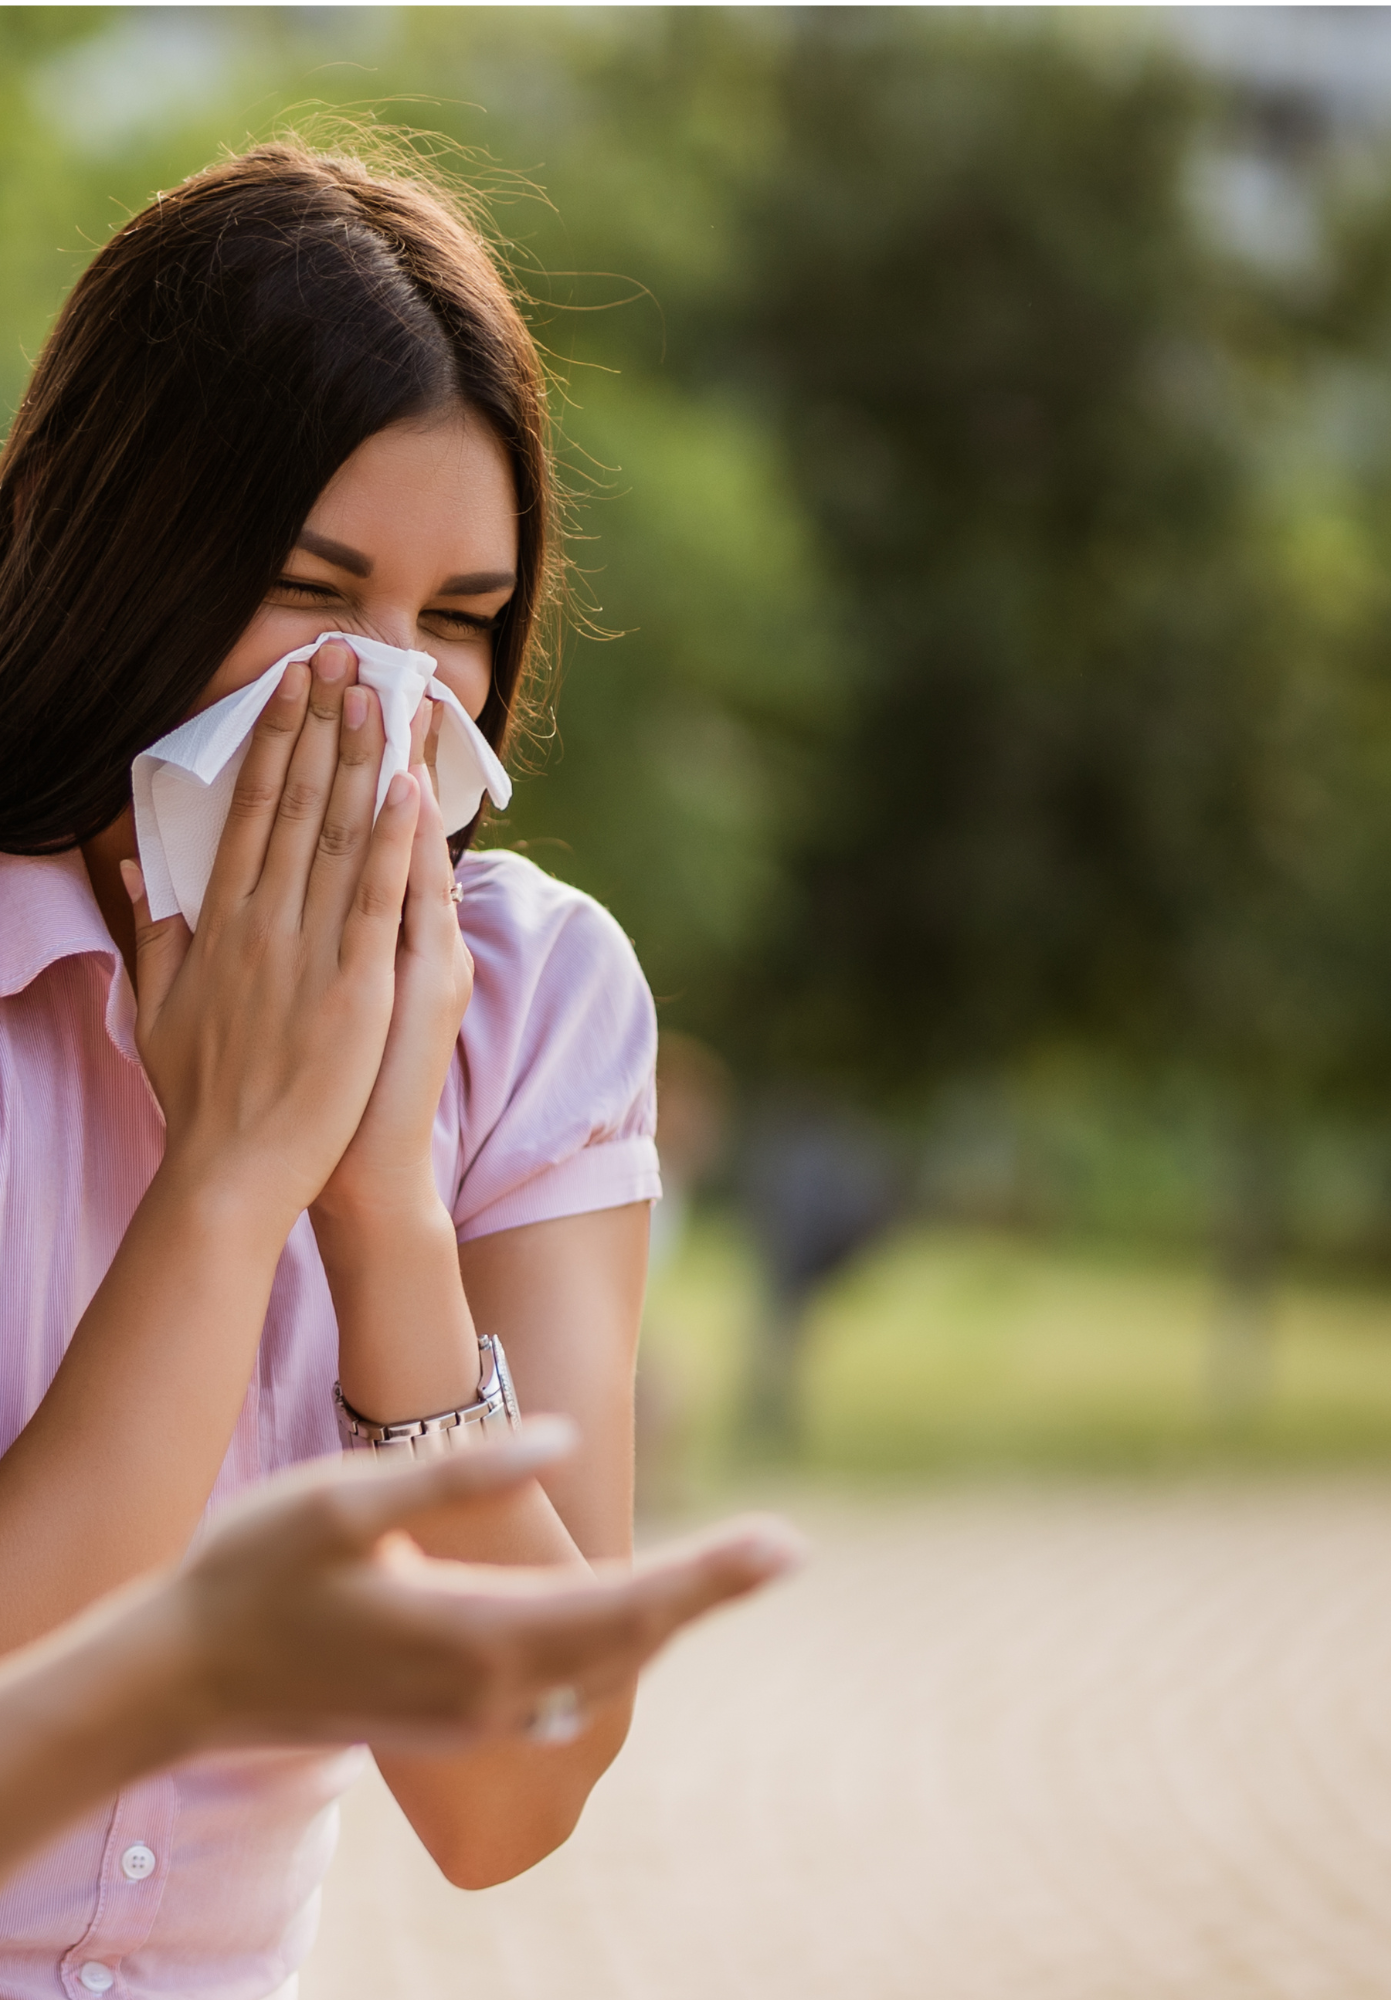 Natural Ways to Combat Seasonal Allergies